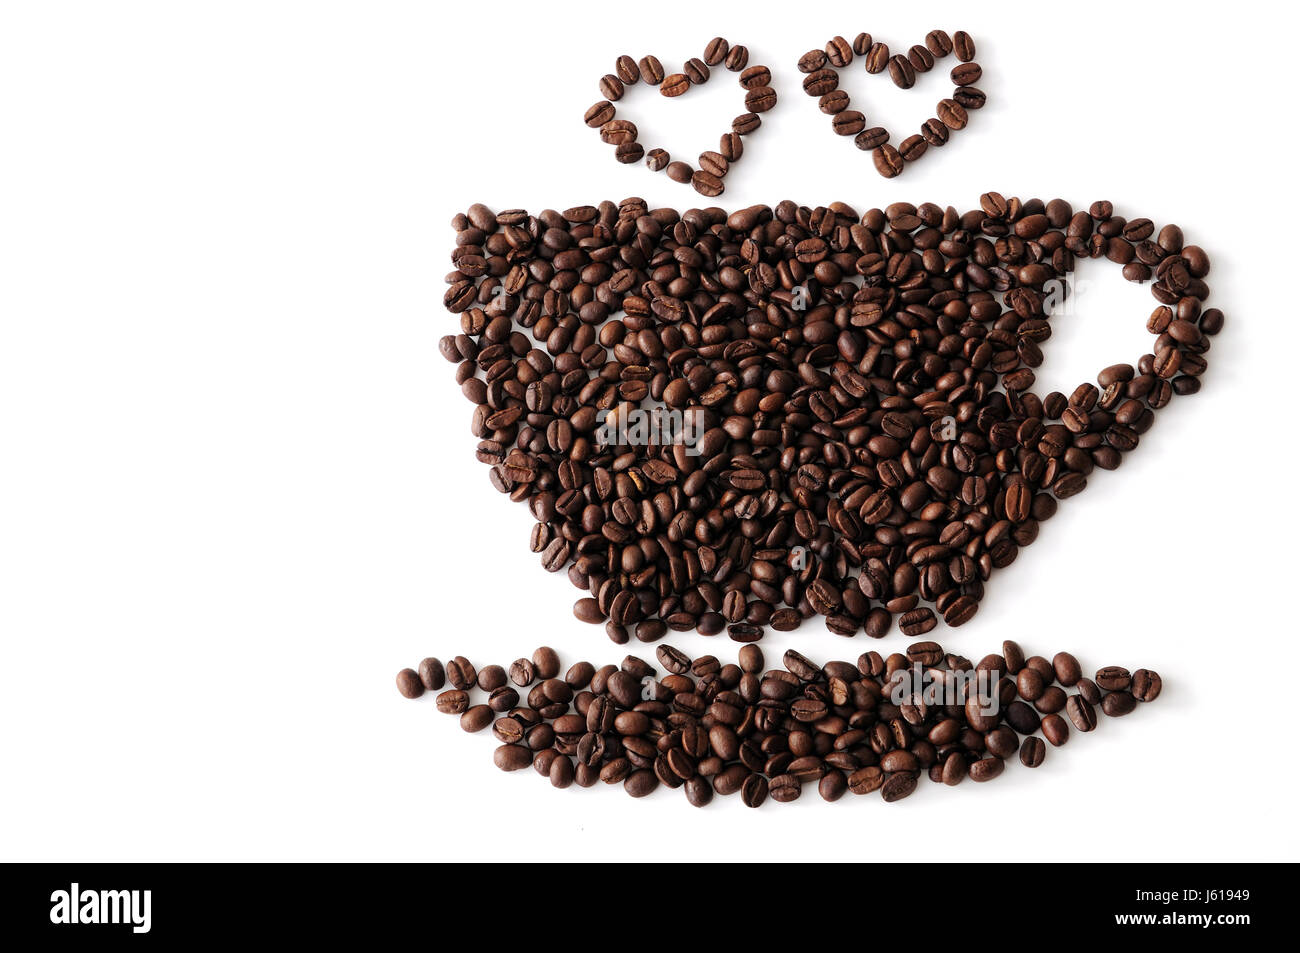 Taza de café taza de café de grano de café corazones granos de café café café taza corazón Foto de stock